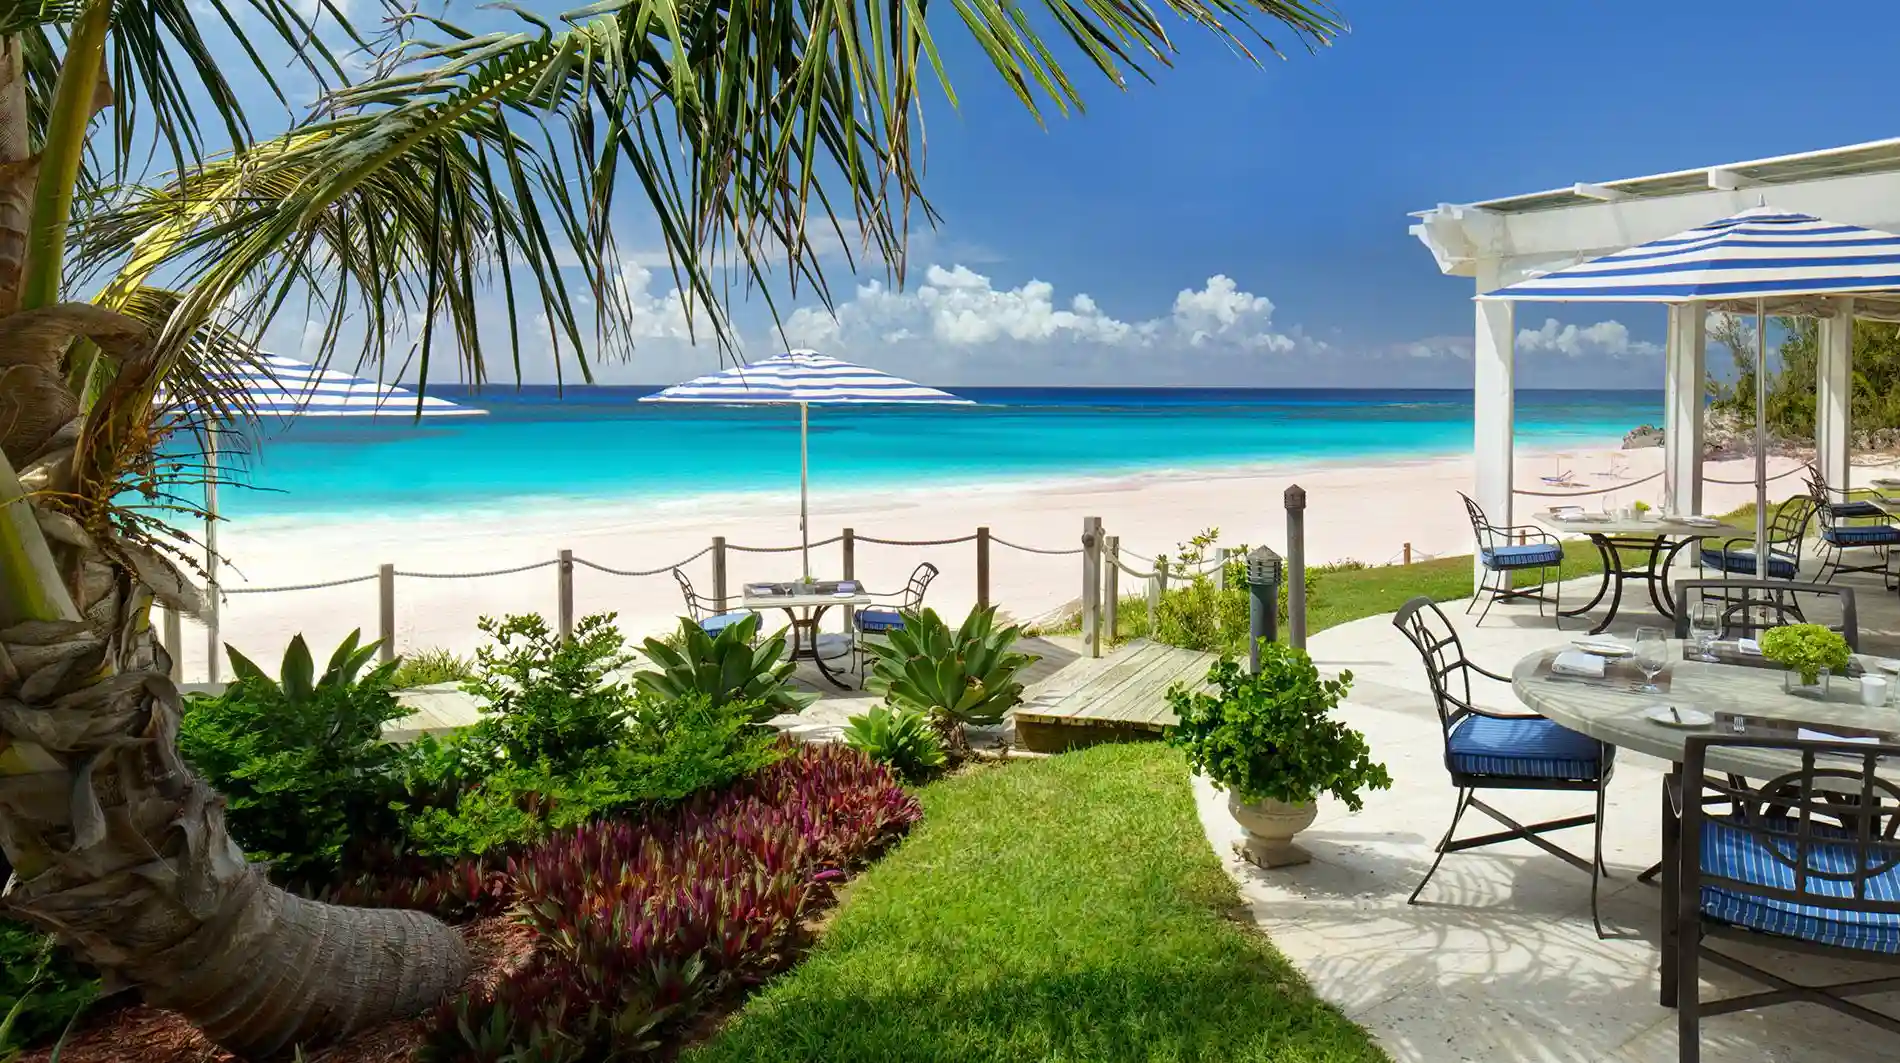 Astonishing Places To Visit In Bermuda